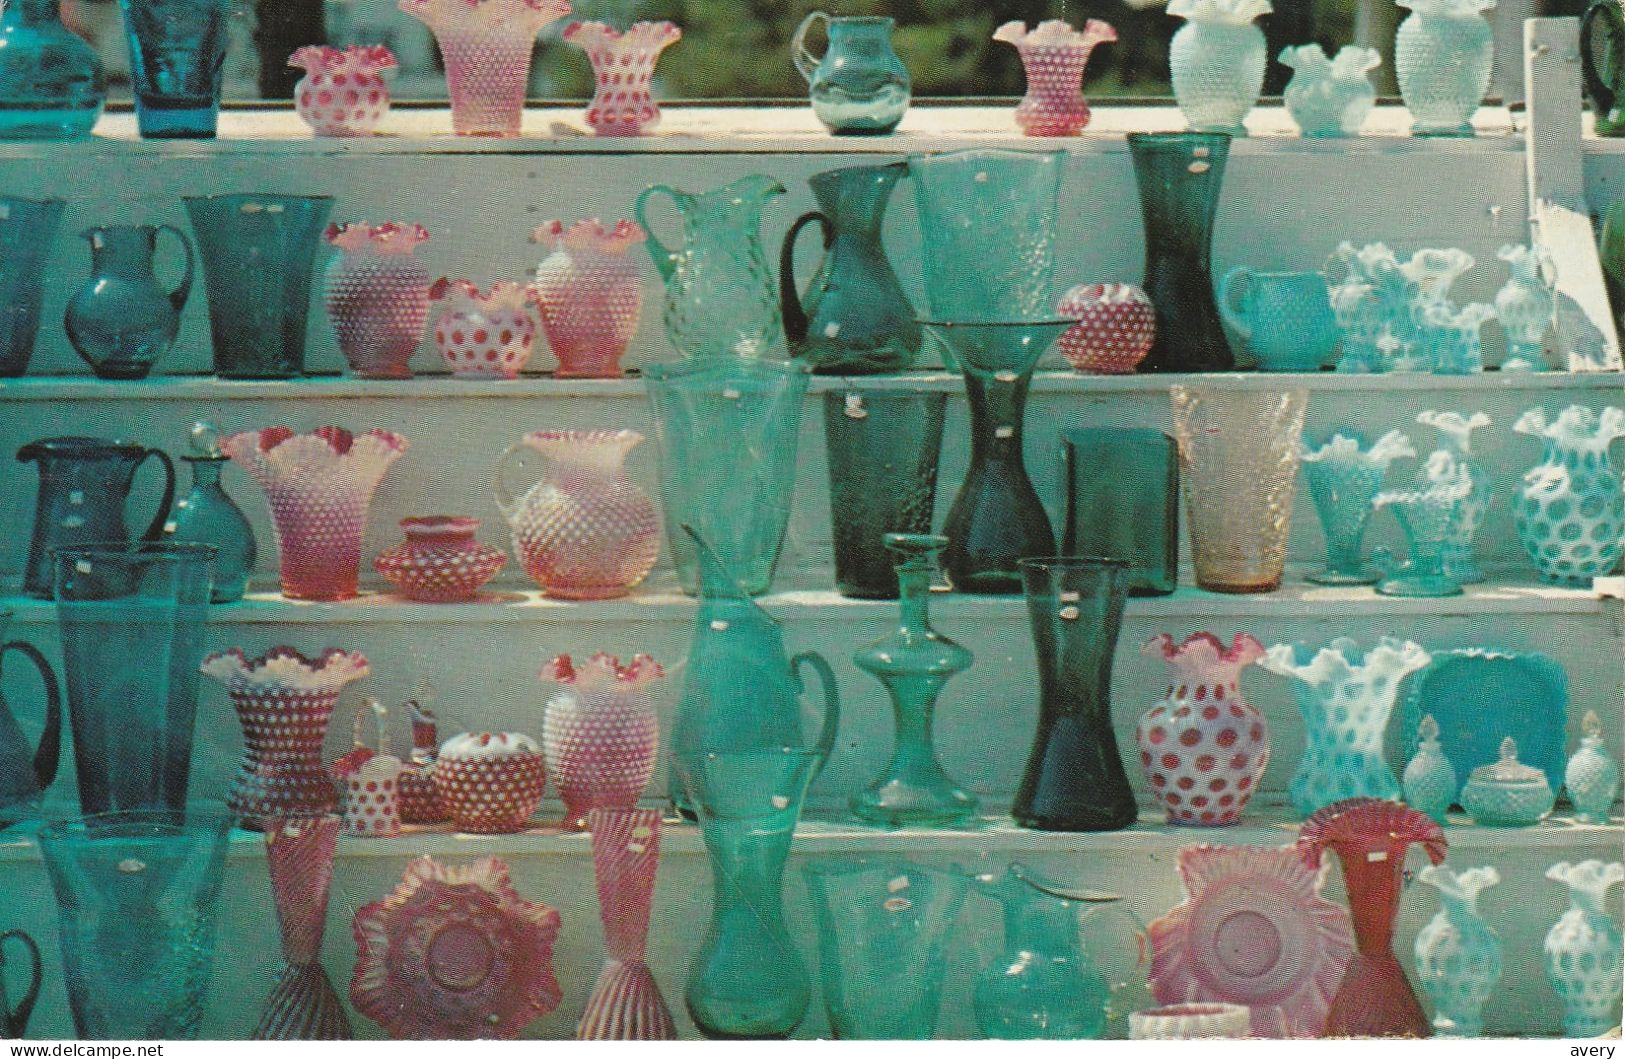 Beautiful Cape Cod Glassware Which Can Be Found On Sale At Cape Cod, Massachusetts - Cape Cod